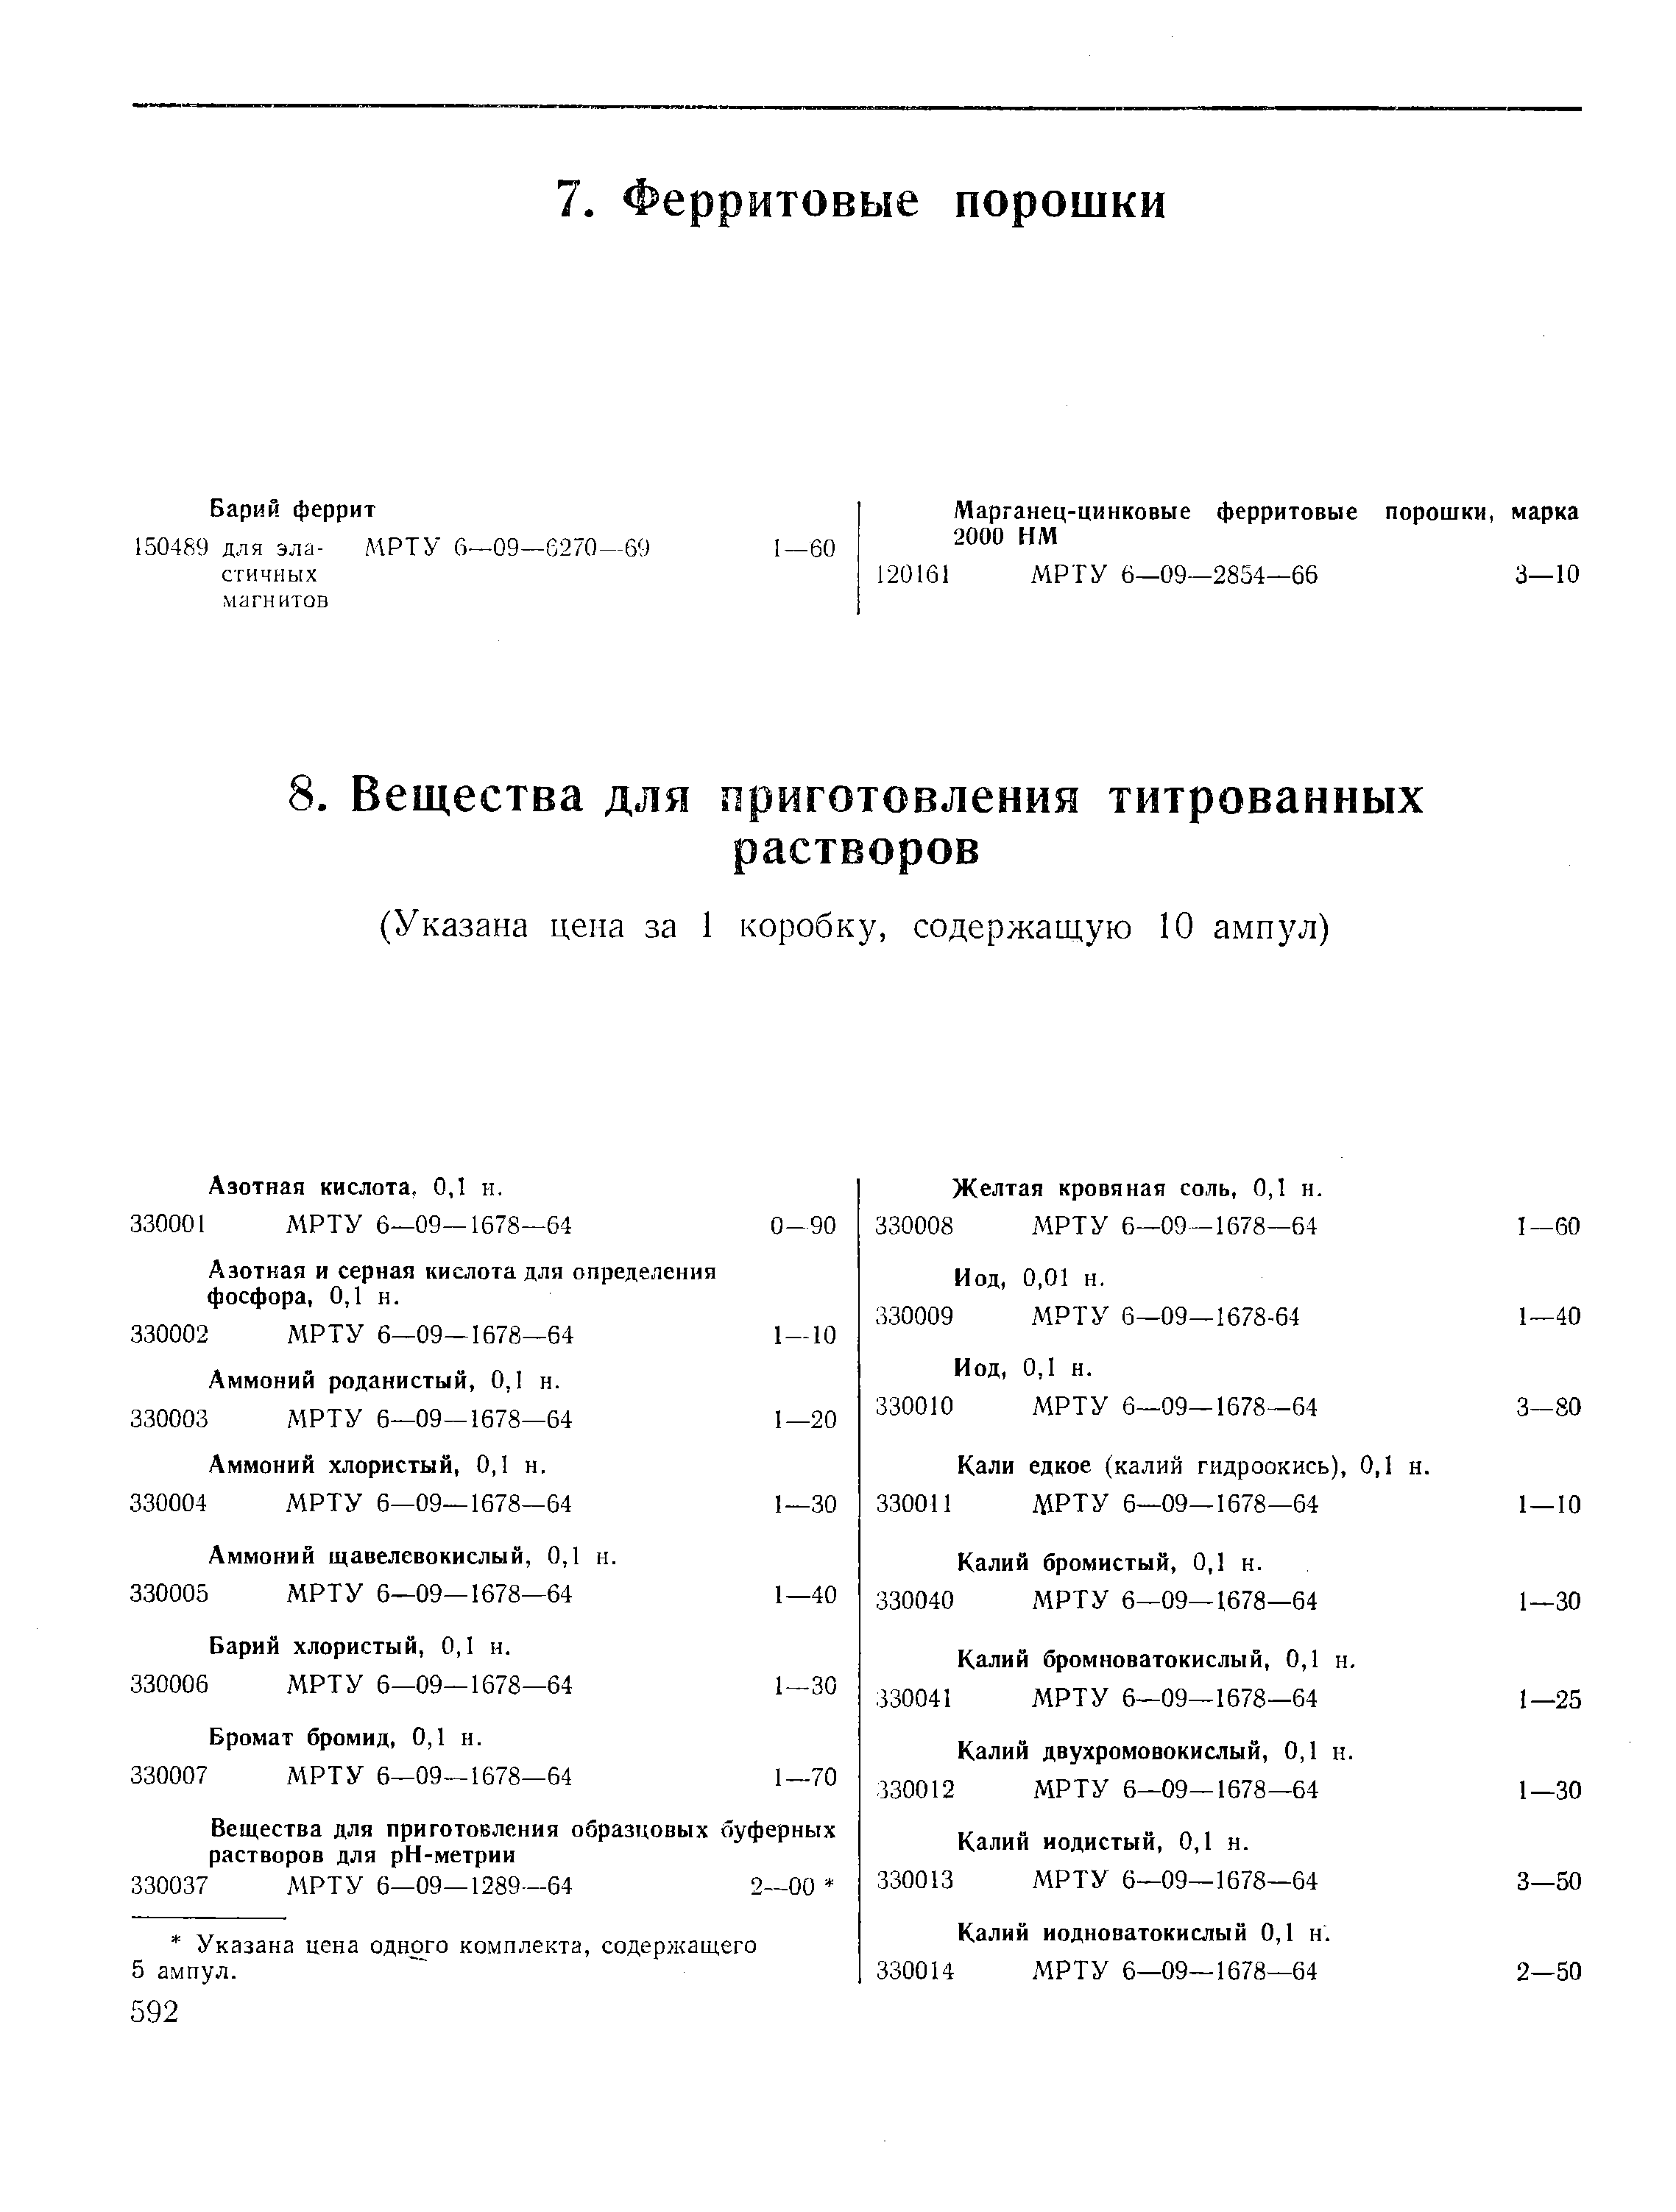 Азотная и серная кислота для определения фосфора, 0,1 н.